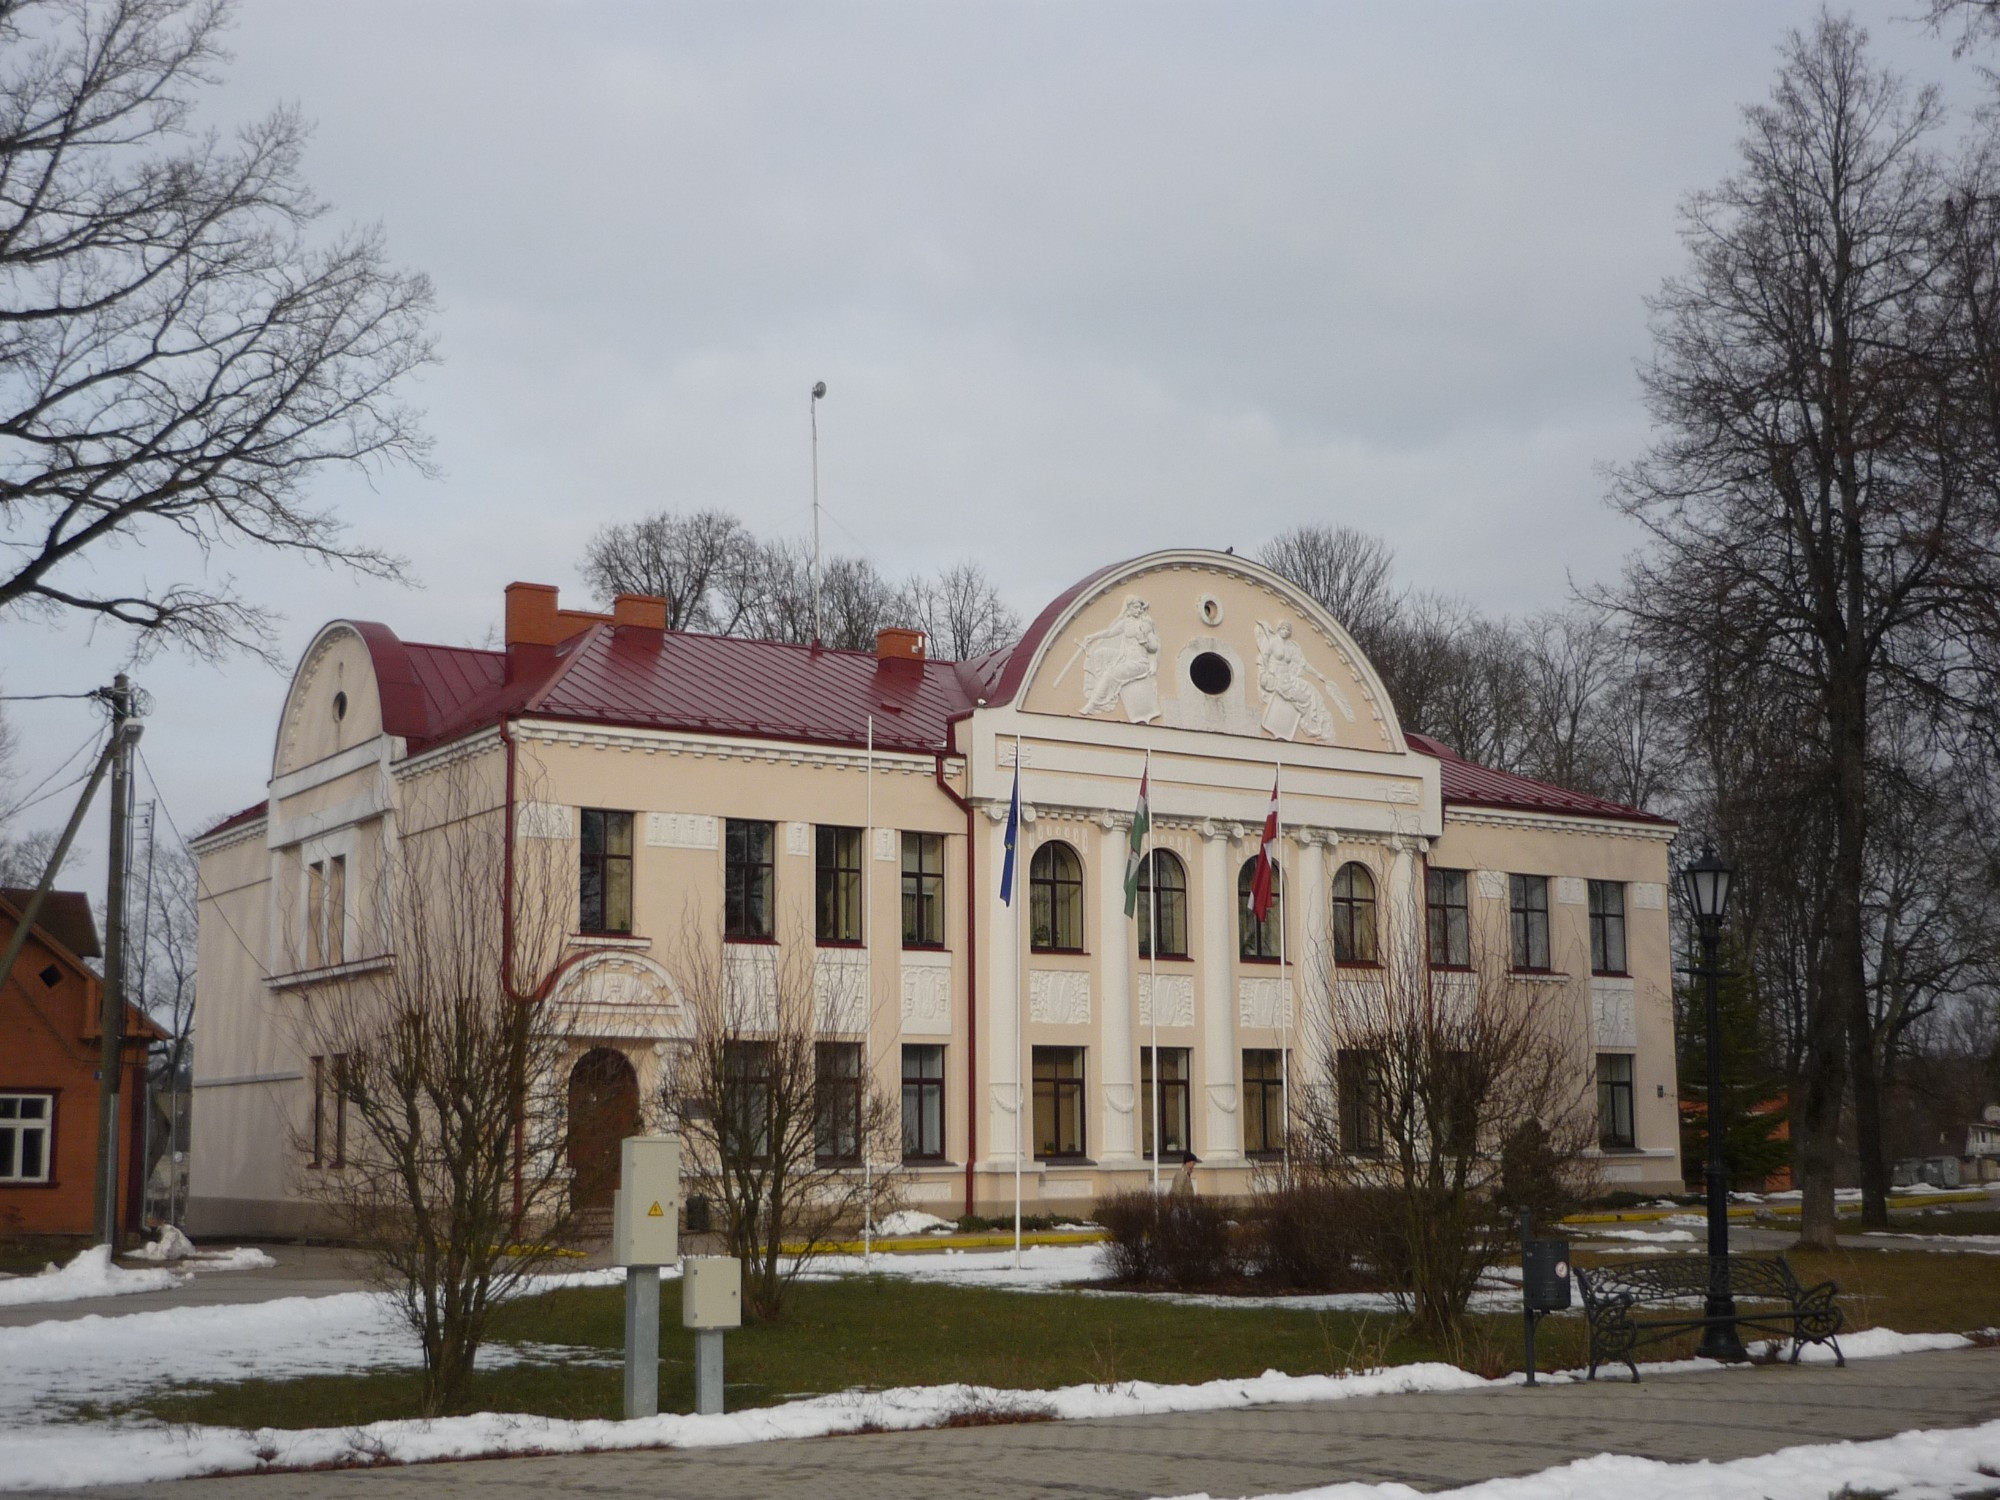 Яунелгава, Latvia